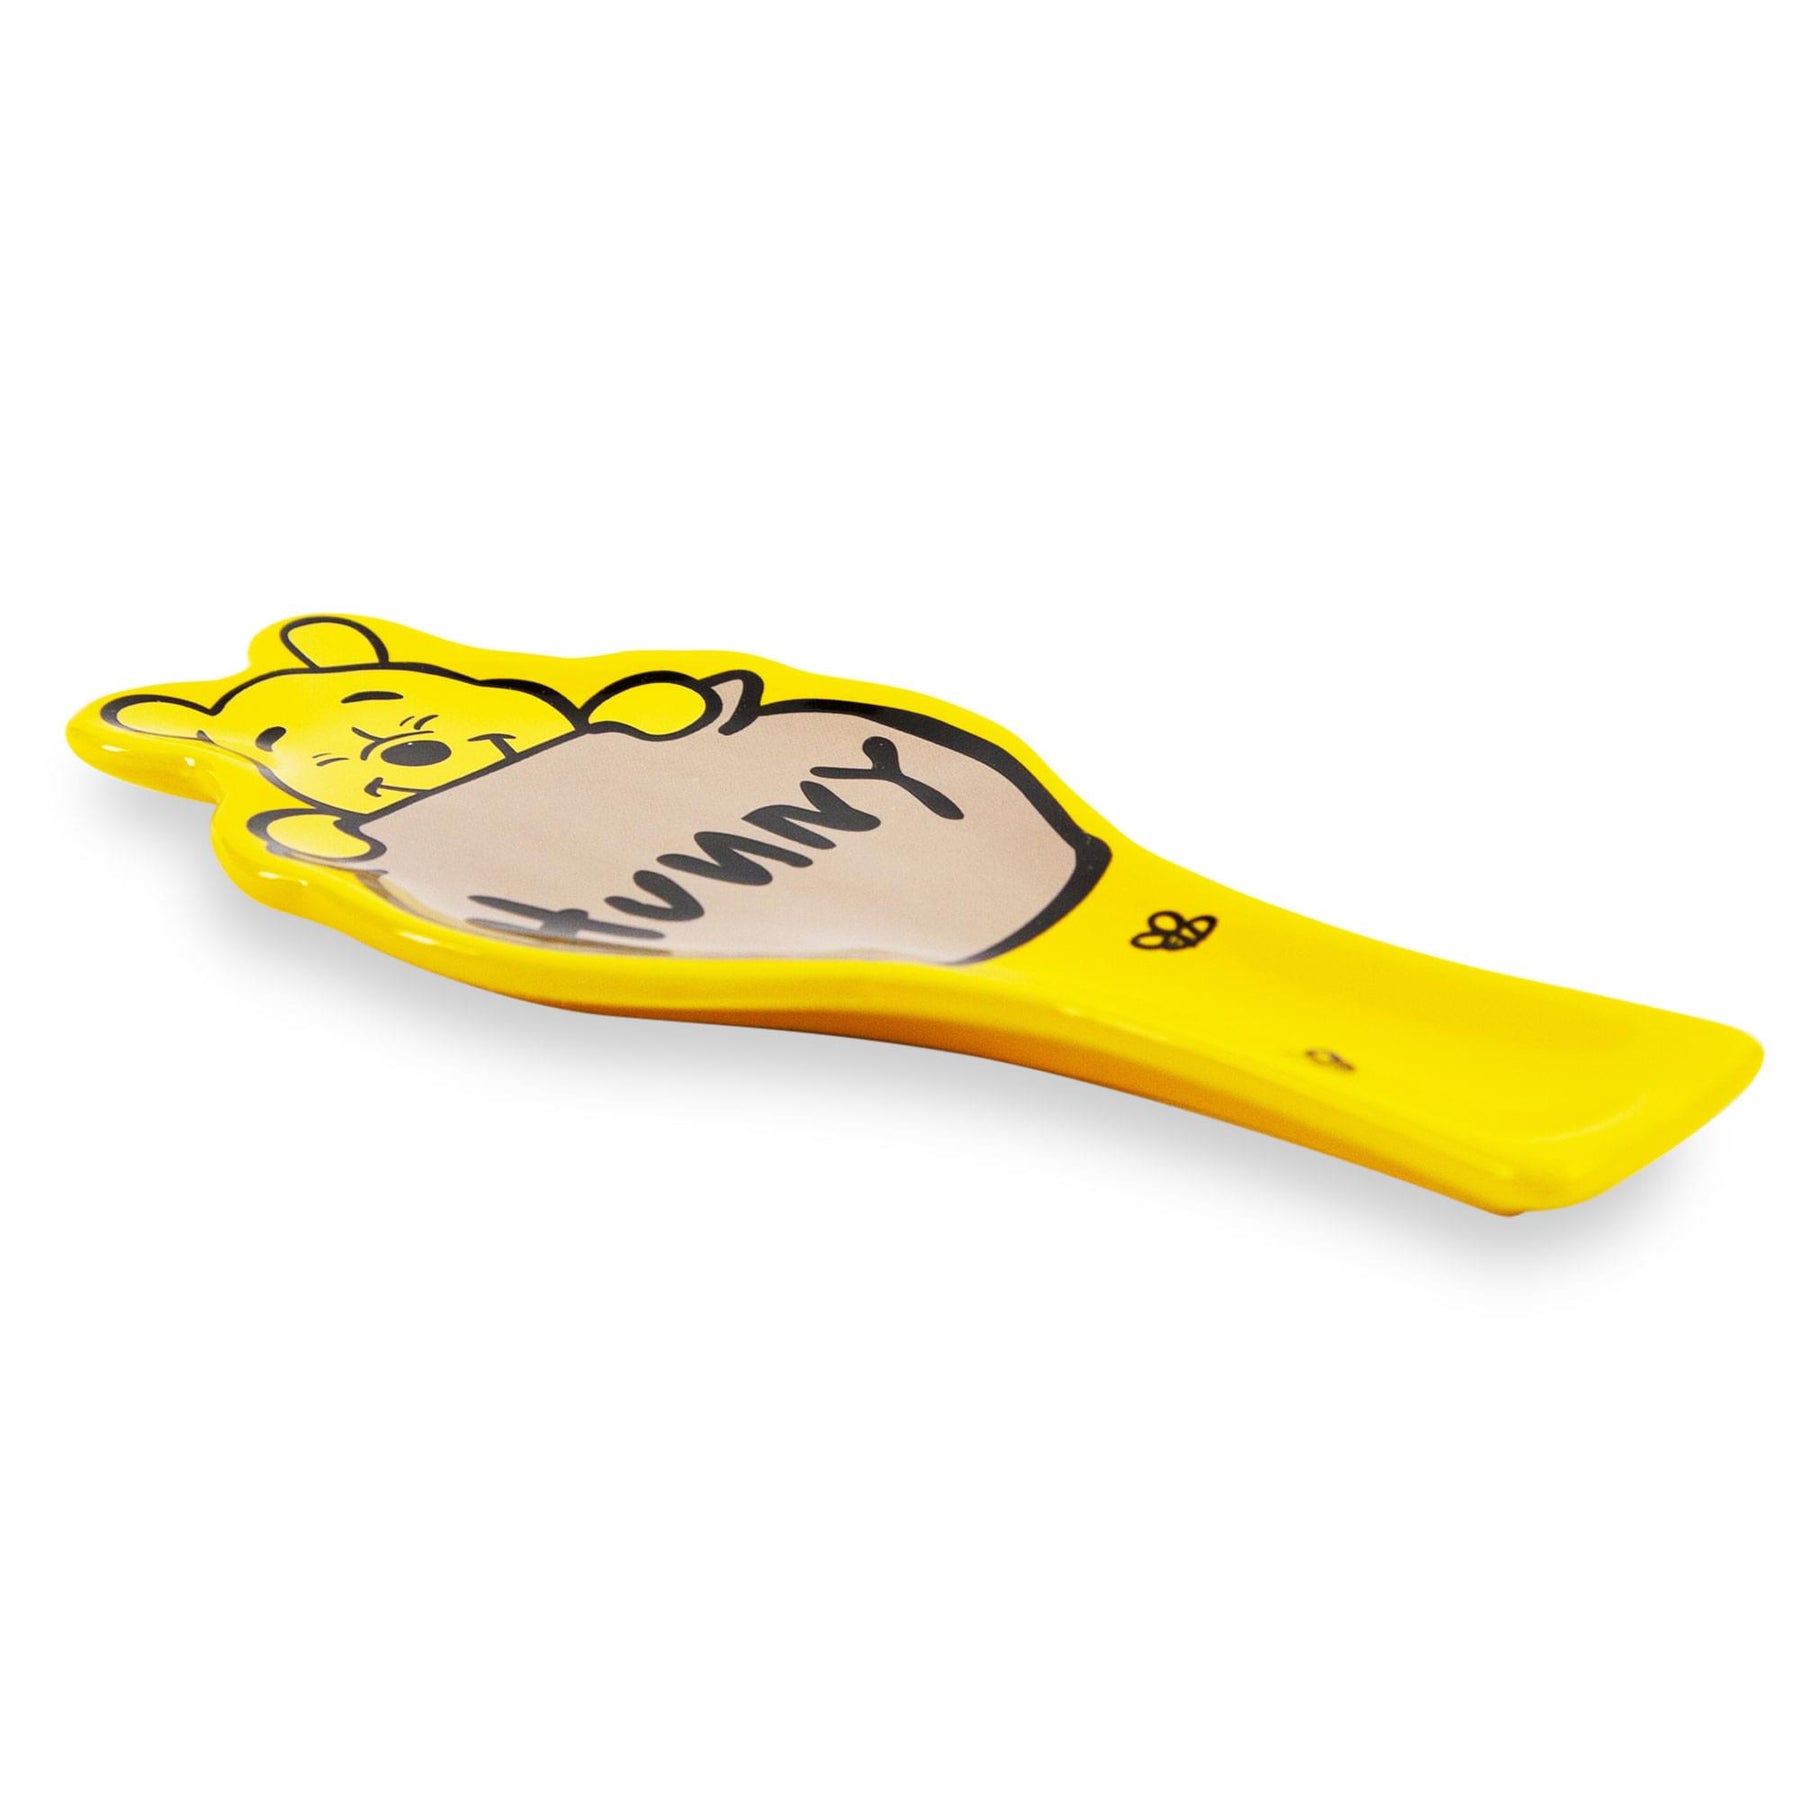 Disney Winnie The Pooh Hunny Ceramic Spoon Rest Holder